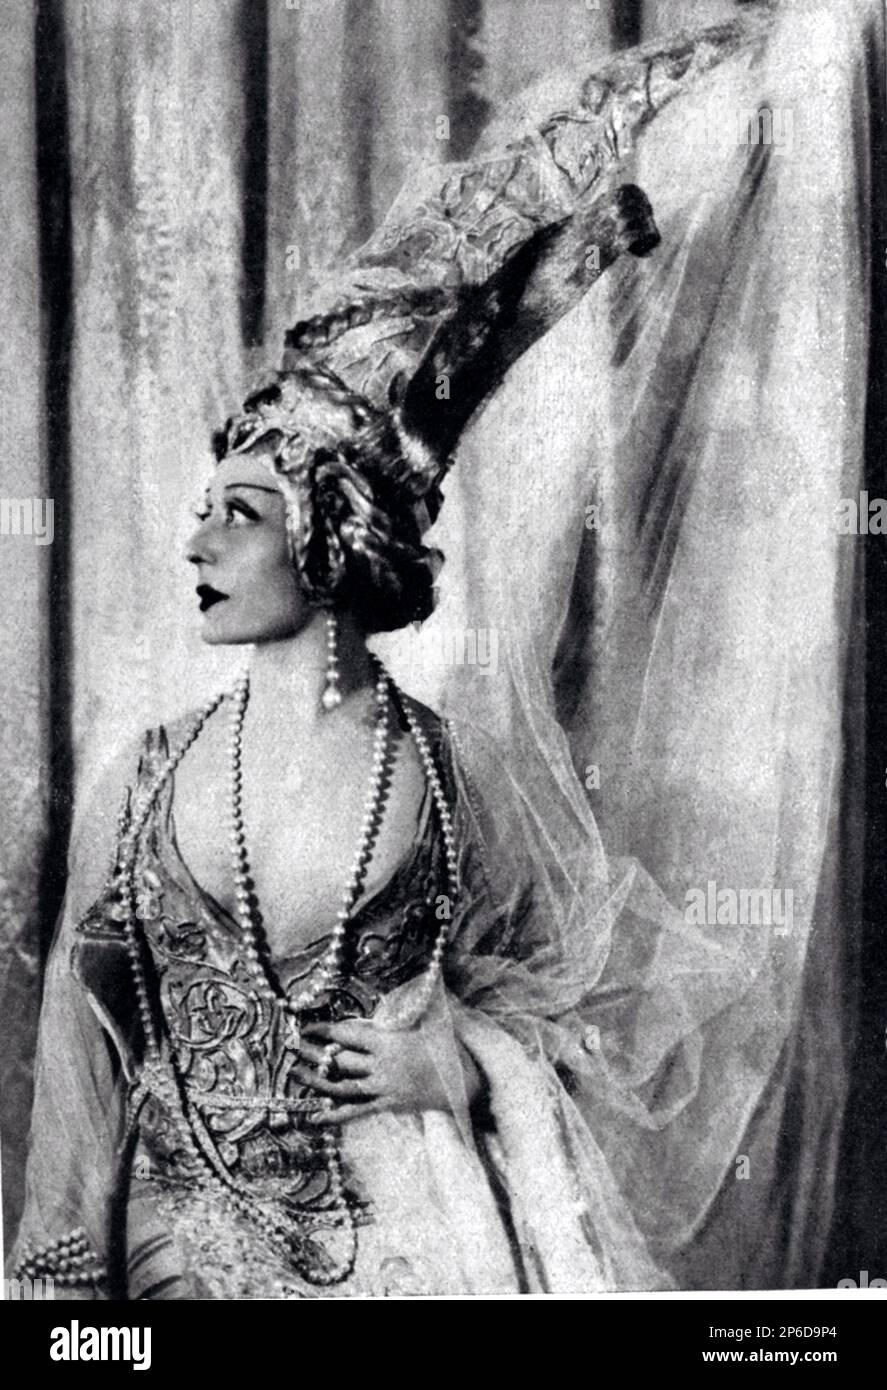 1914 c, FRANCE : AGNES SOREL  ( 1873 - 1966 ) in a scene costume , sister of celebrated french actress CECILE SOREL . Agnes was married with the famous photographer REUTLINGER . - TEATRO - THEATER - DIVA - DIVINA - costume teatrale  - cappelo - hat - scollatura - neck-opening - decollete' - neckline  - pearls - perla - perle - collana - necklace - jewellery - jewels - gioiello - gioielli - veil - velo - costume di scena ----  Archivio GBB Stock Photo